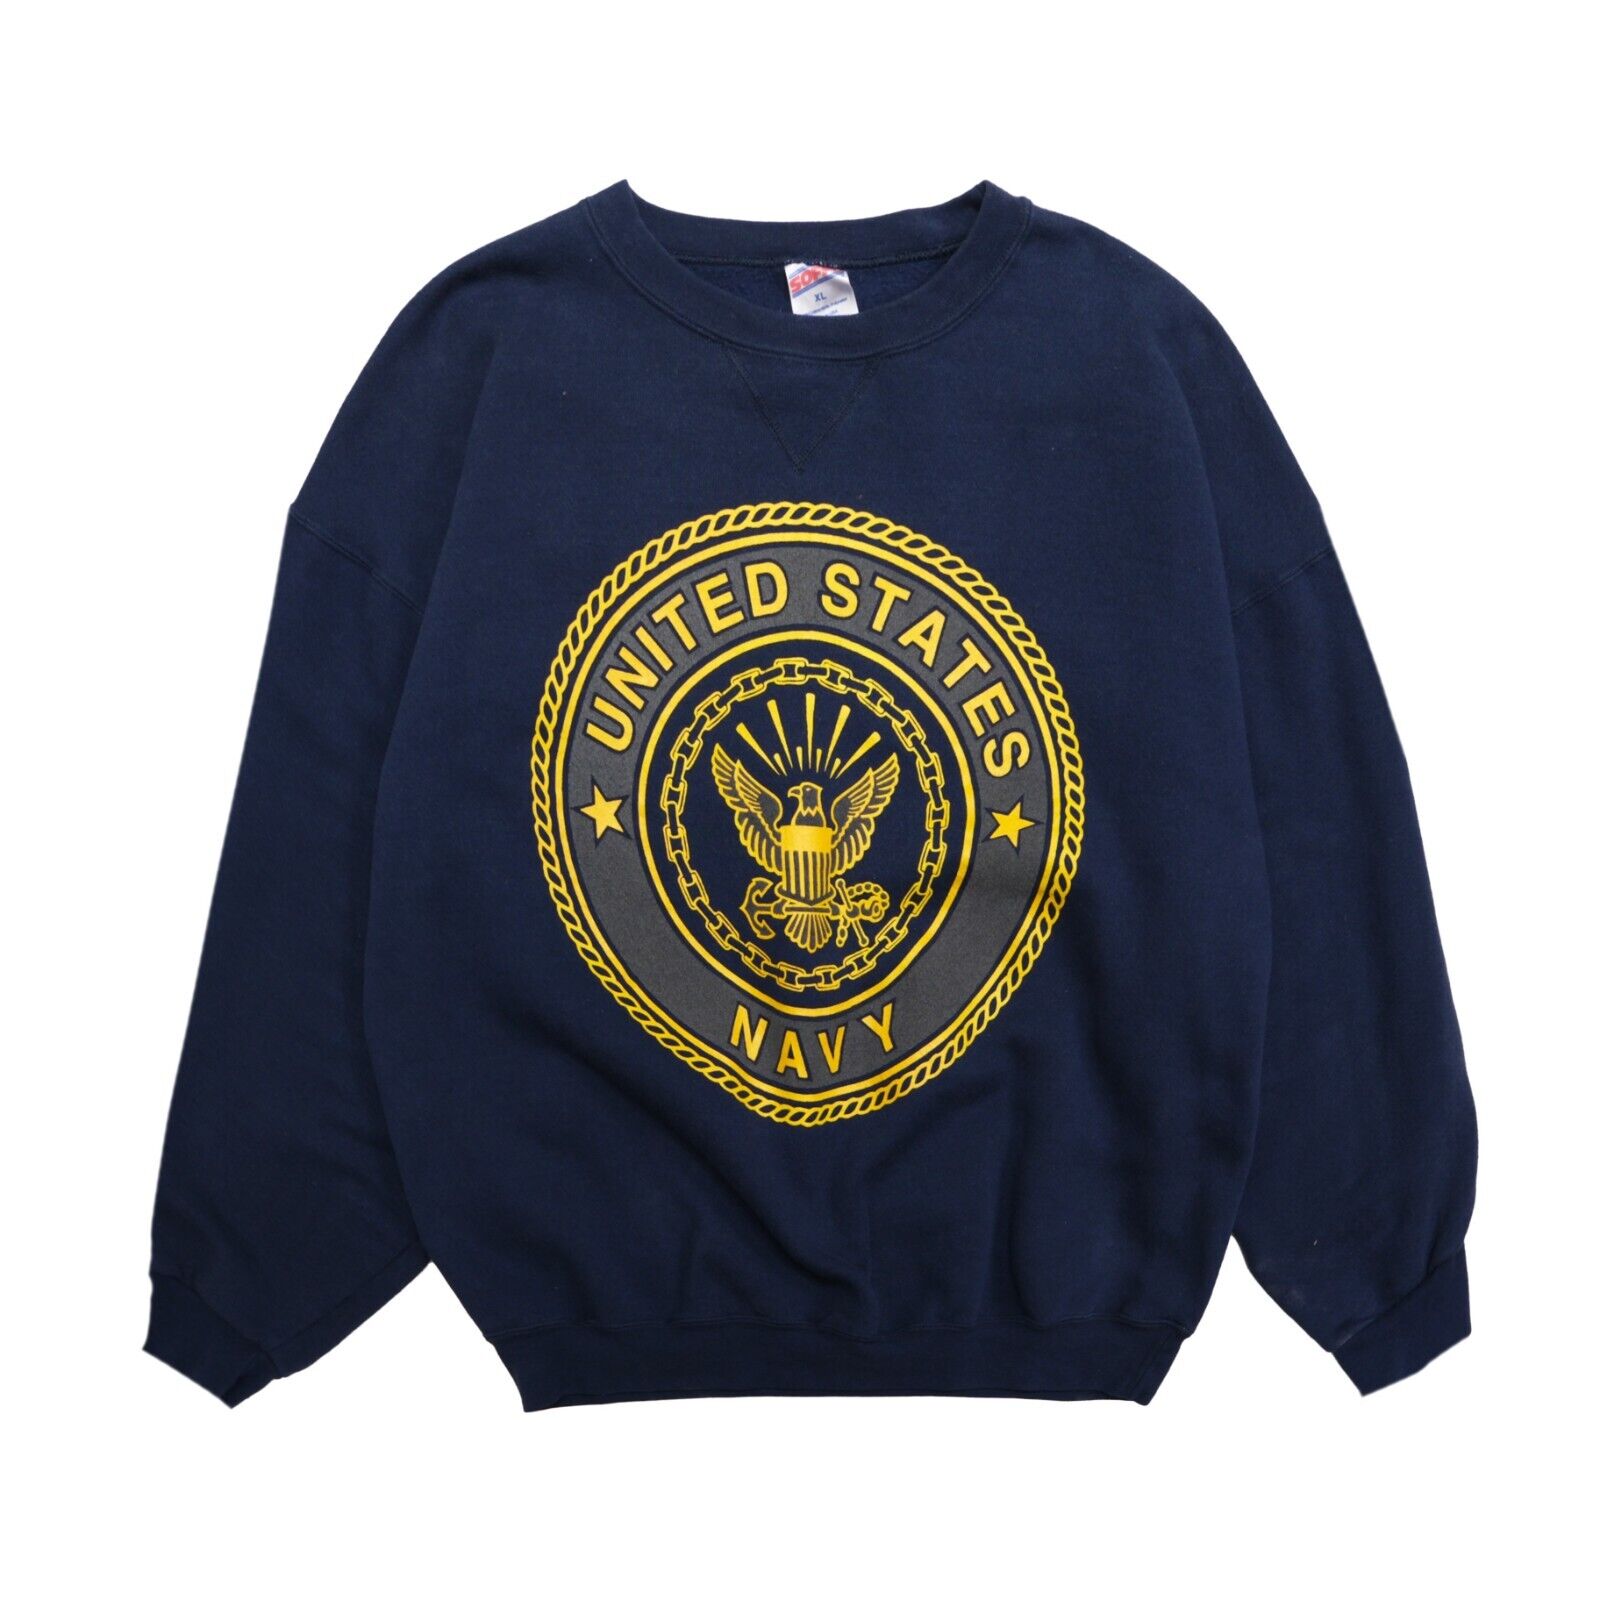 Vintage United States Navy Crest Sweatshirt Crewneck Size XL Blue